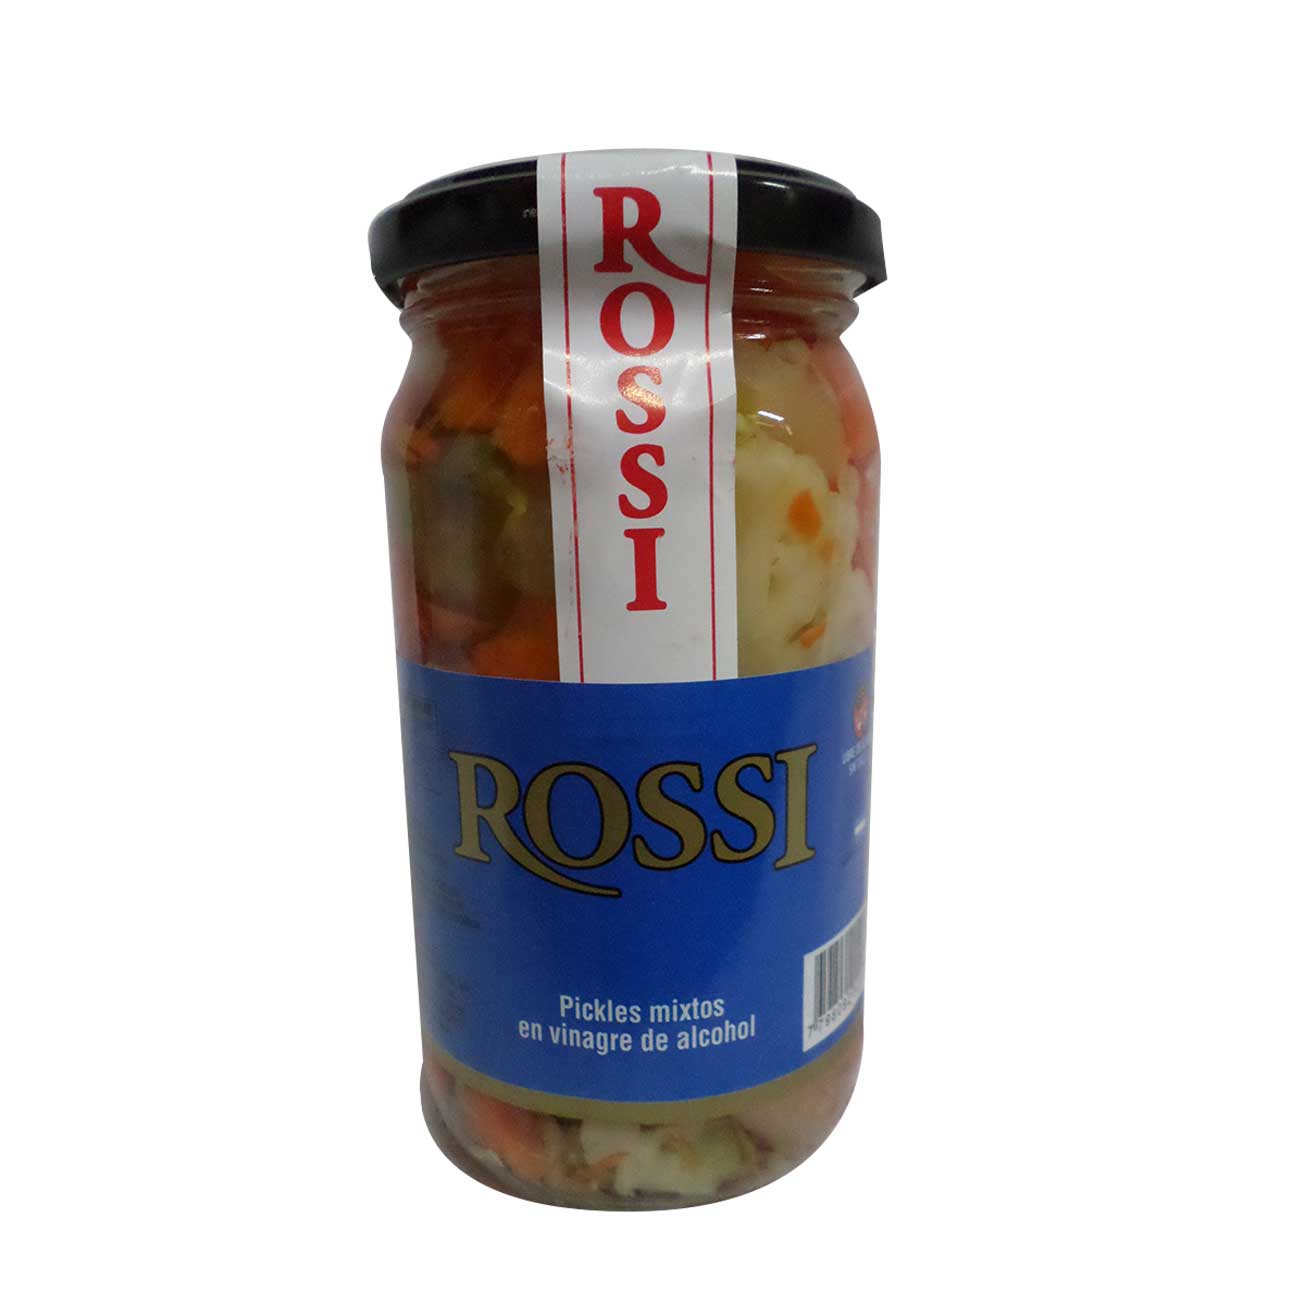  Pickles mixtos en vinagre de alcohol 330g ROSSI